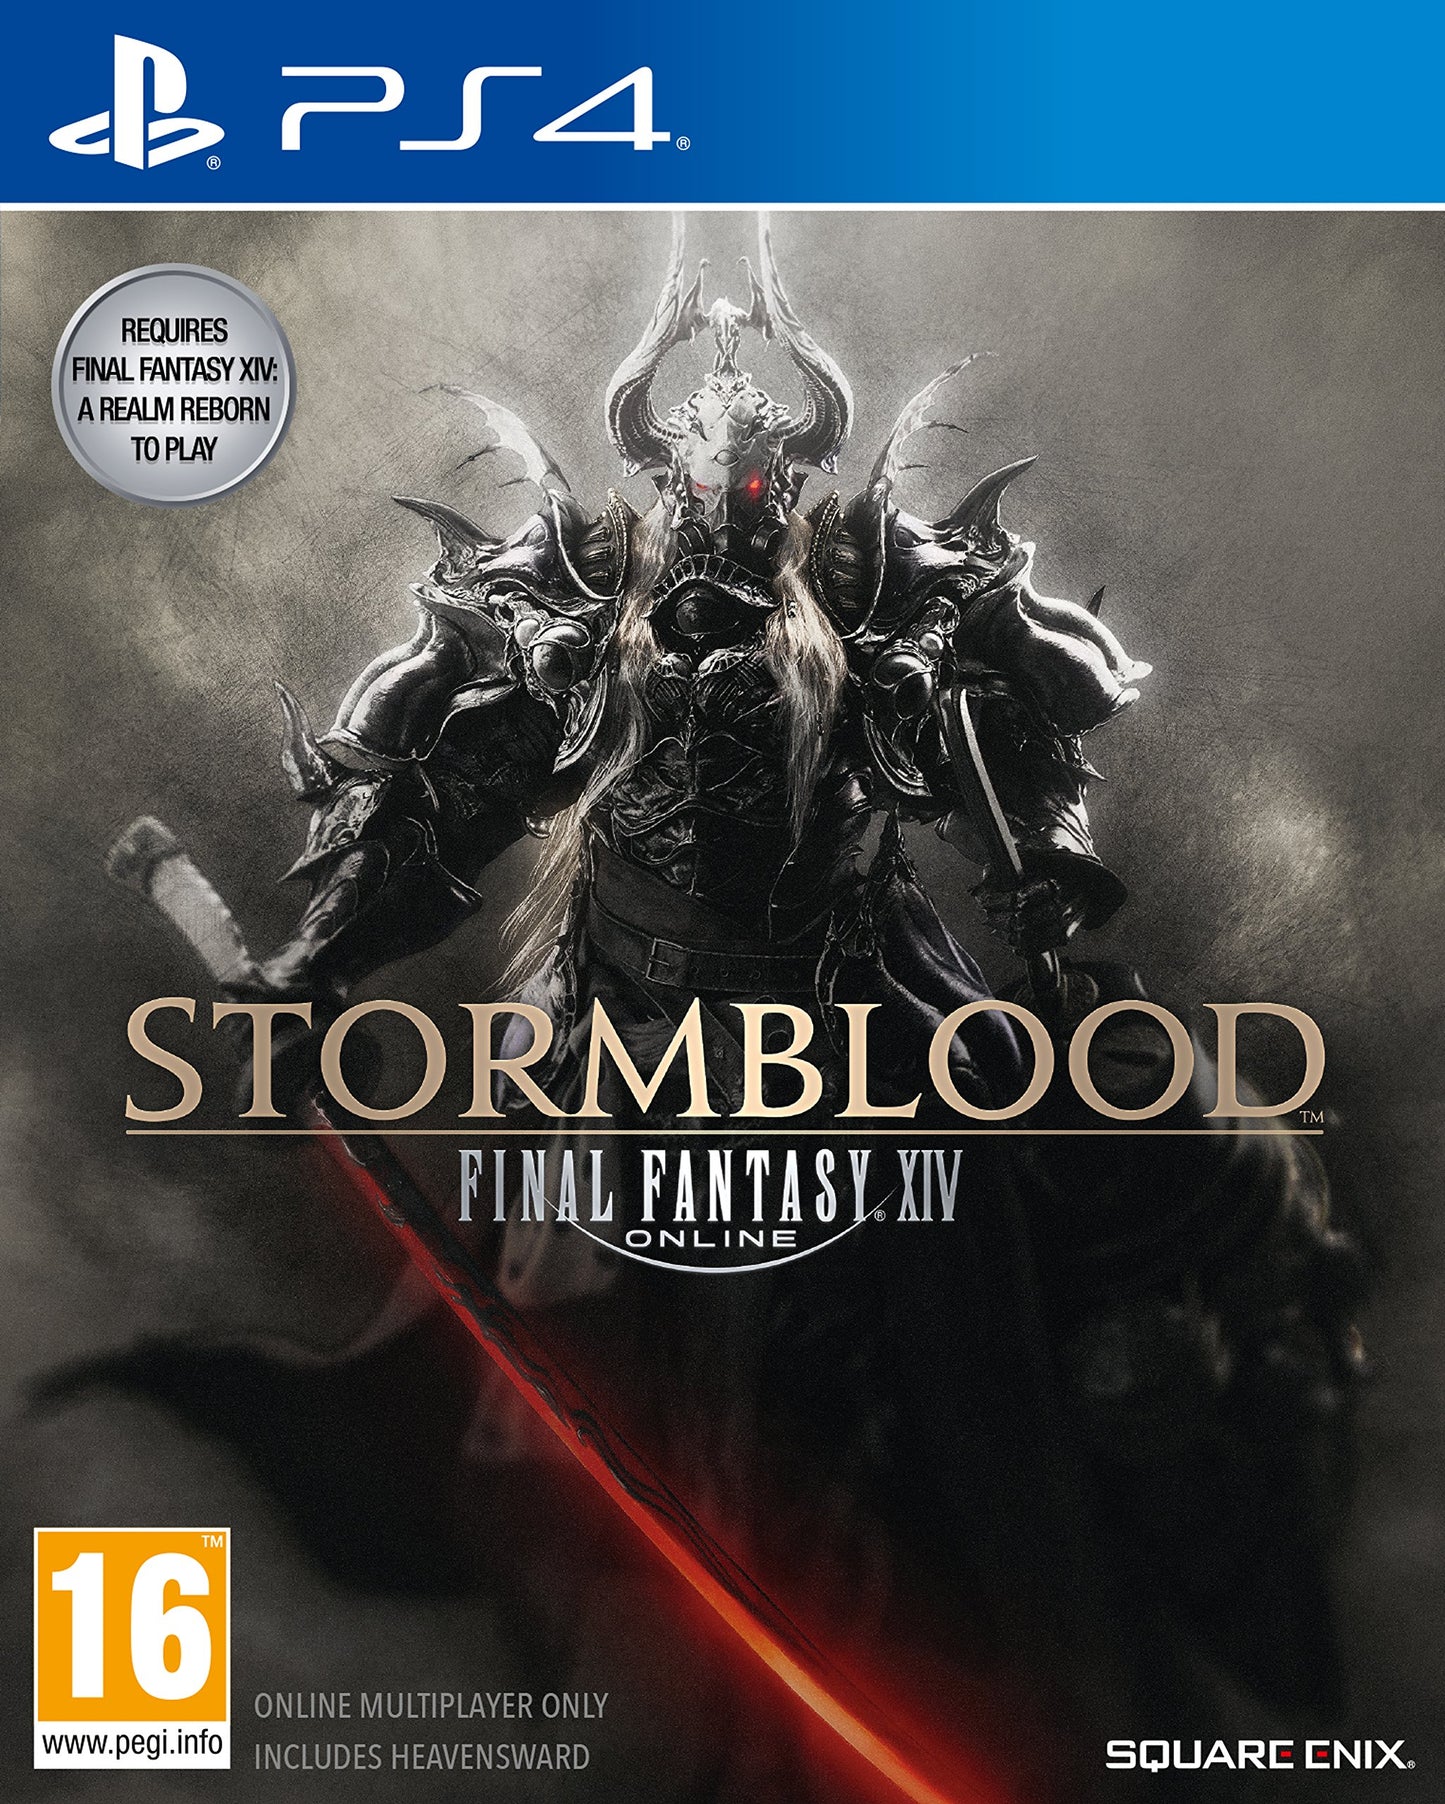 Final Fantasy XIV Online Storm blood  PlayStation 4